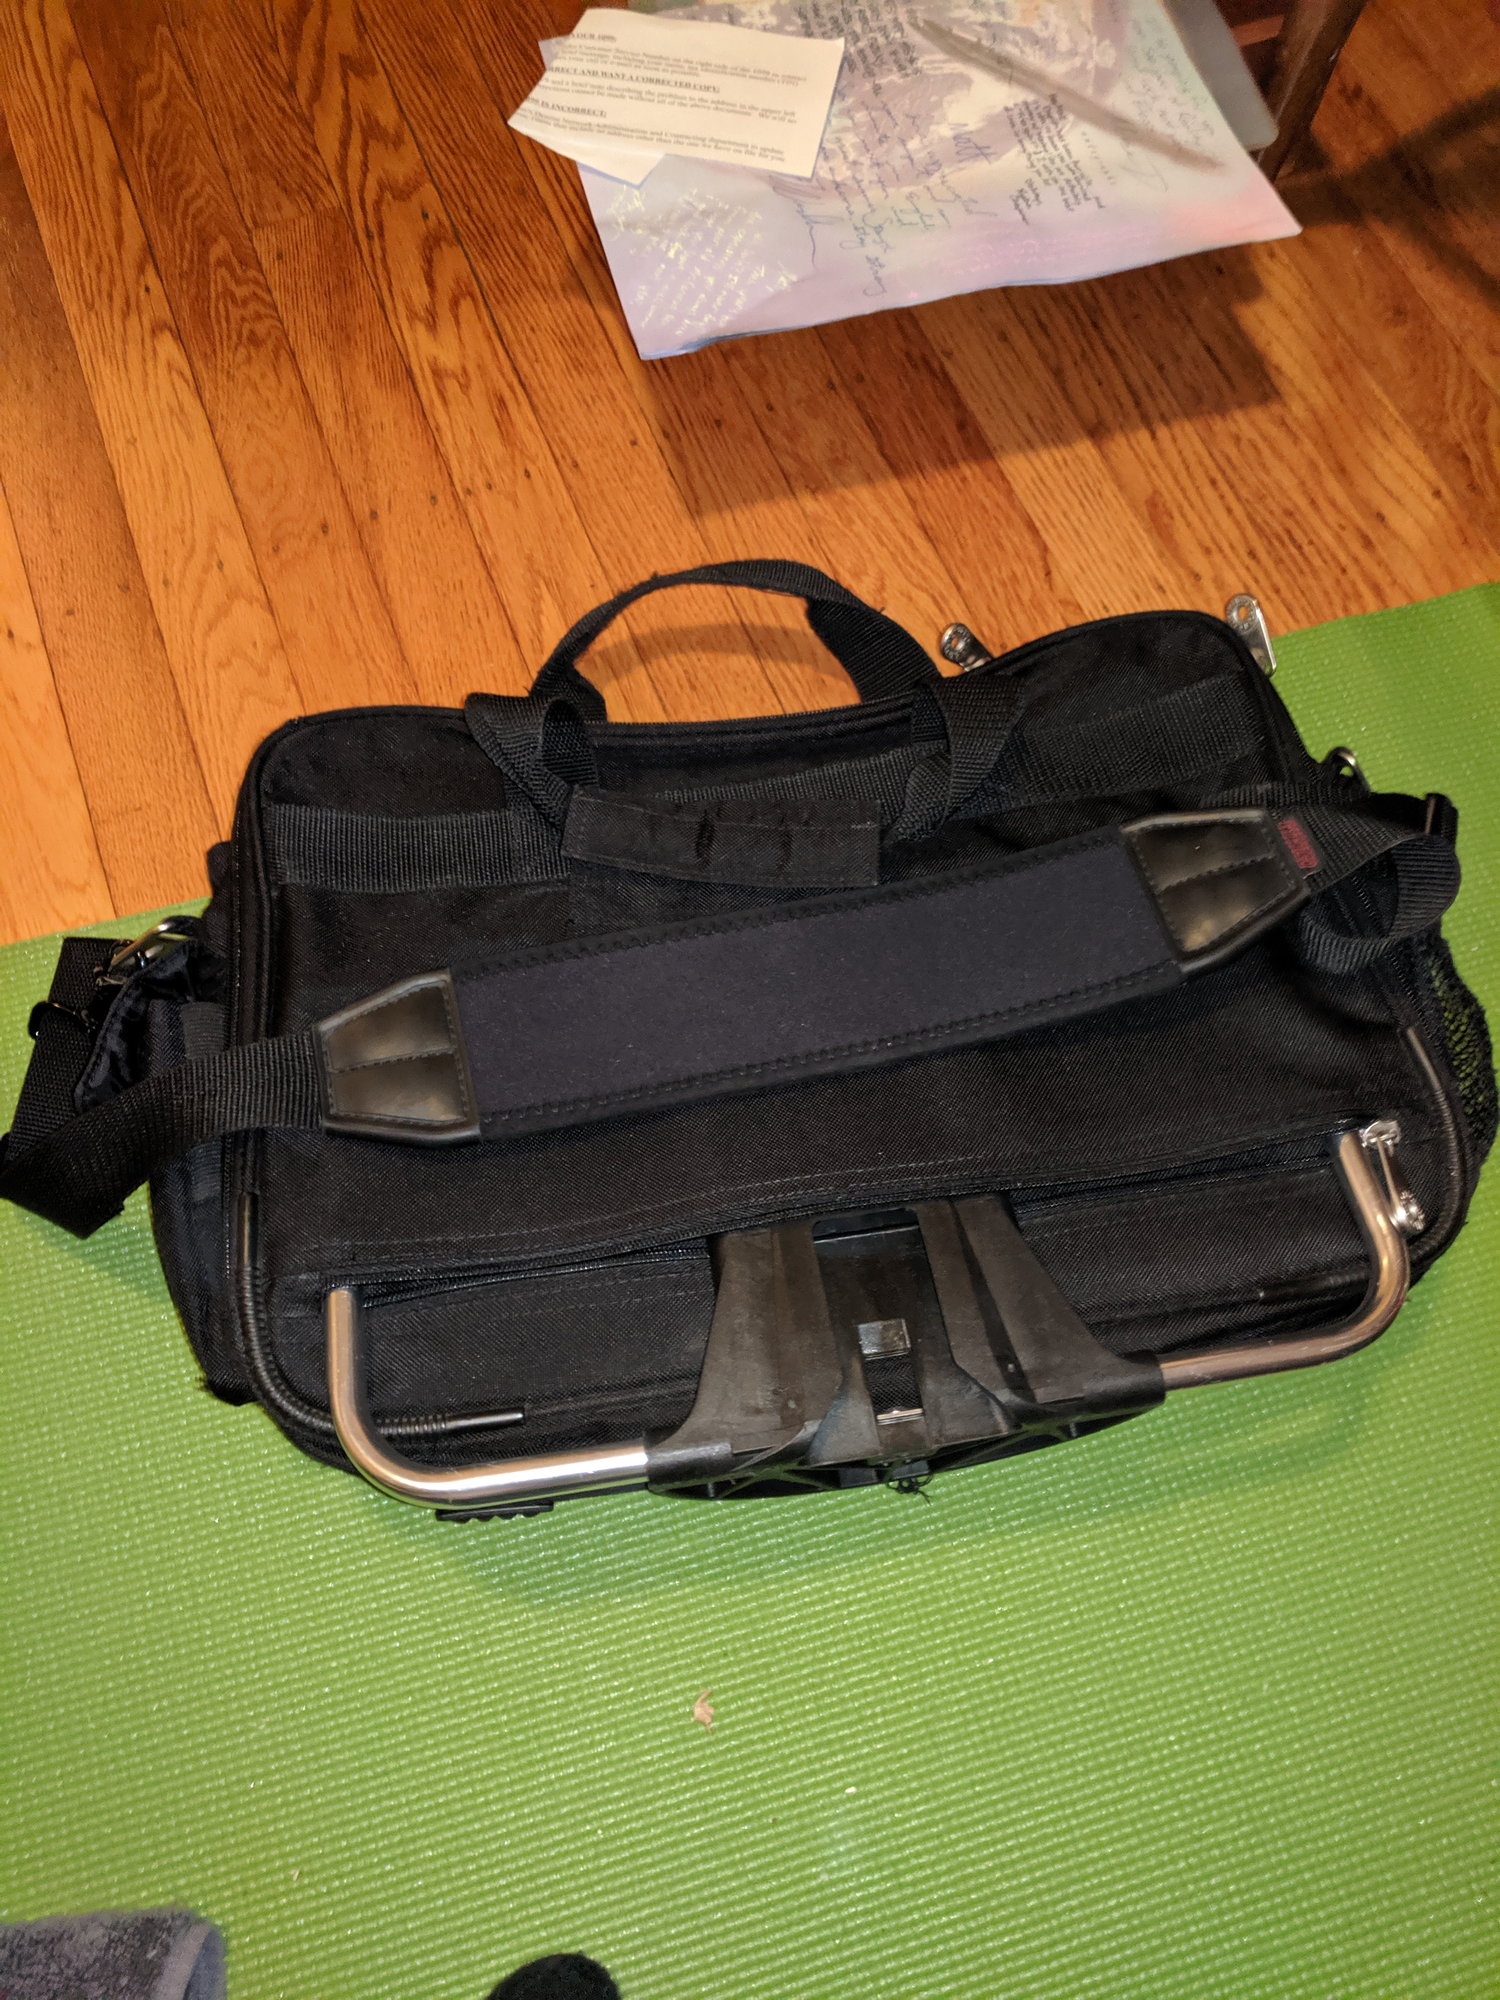 [Brompton] DIY bag + luggage frame? - Bike Forums